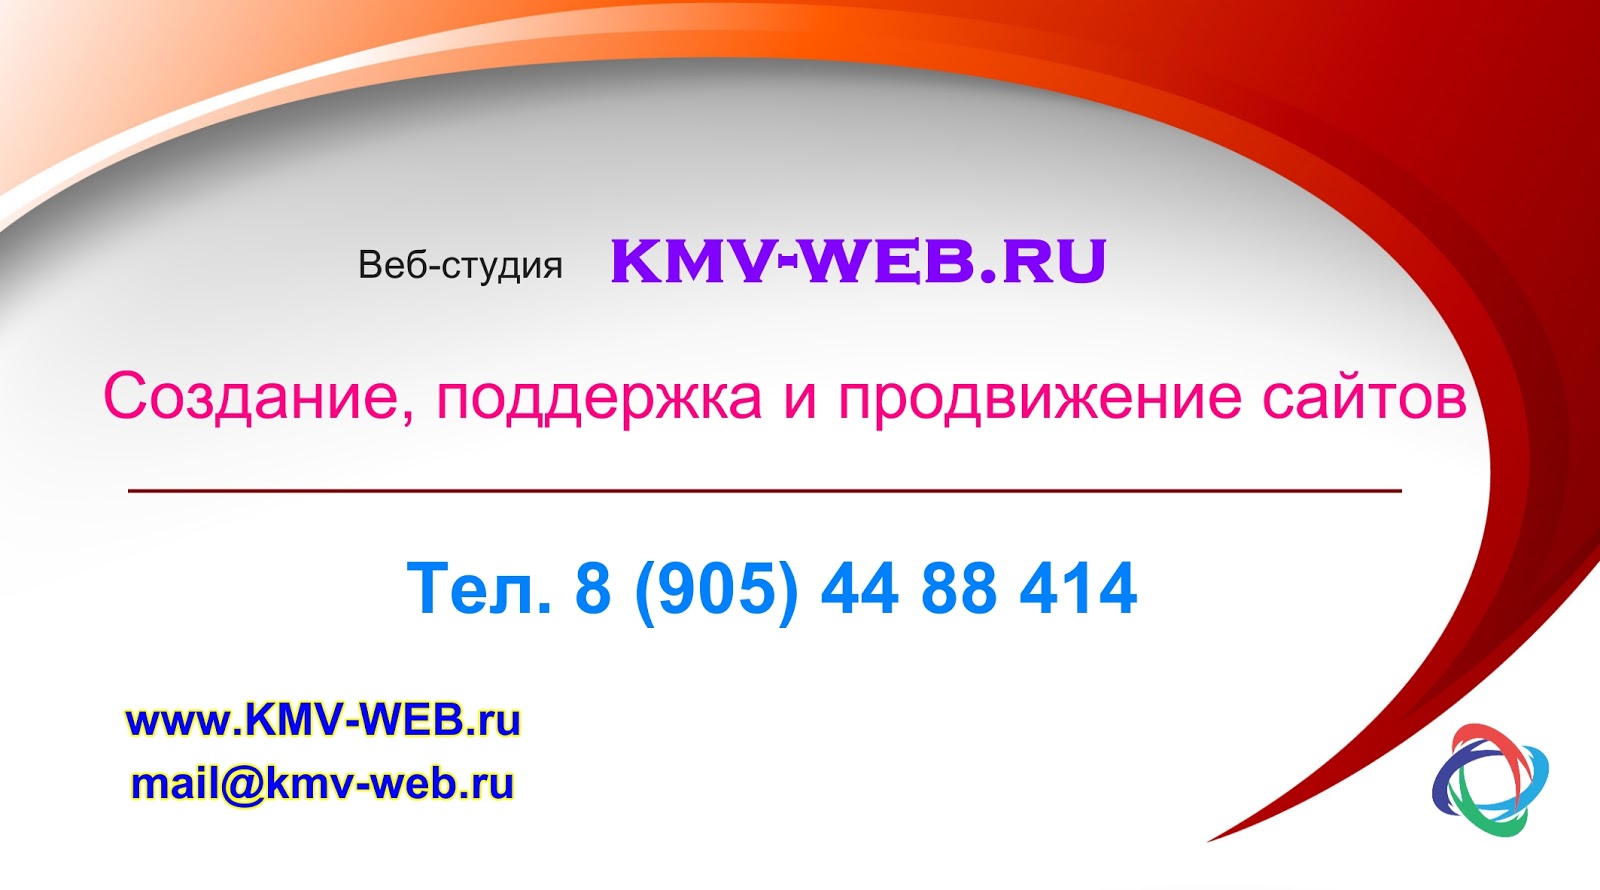 LWG KMV. Web ru net